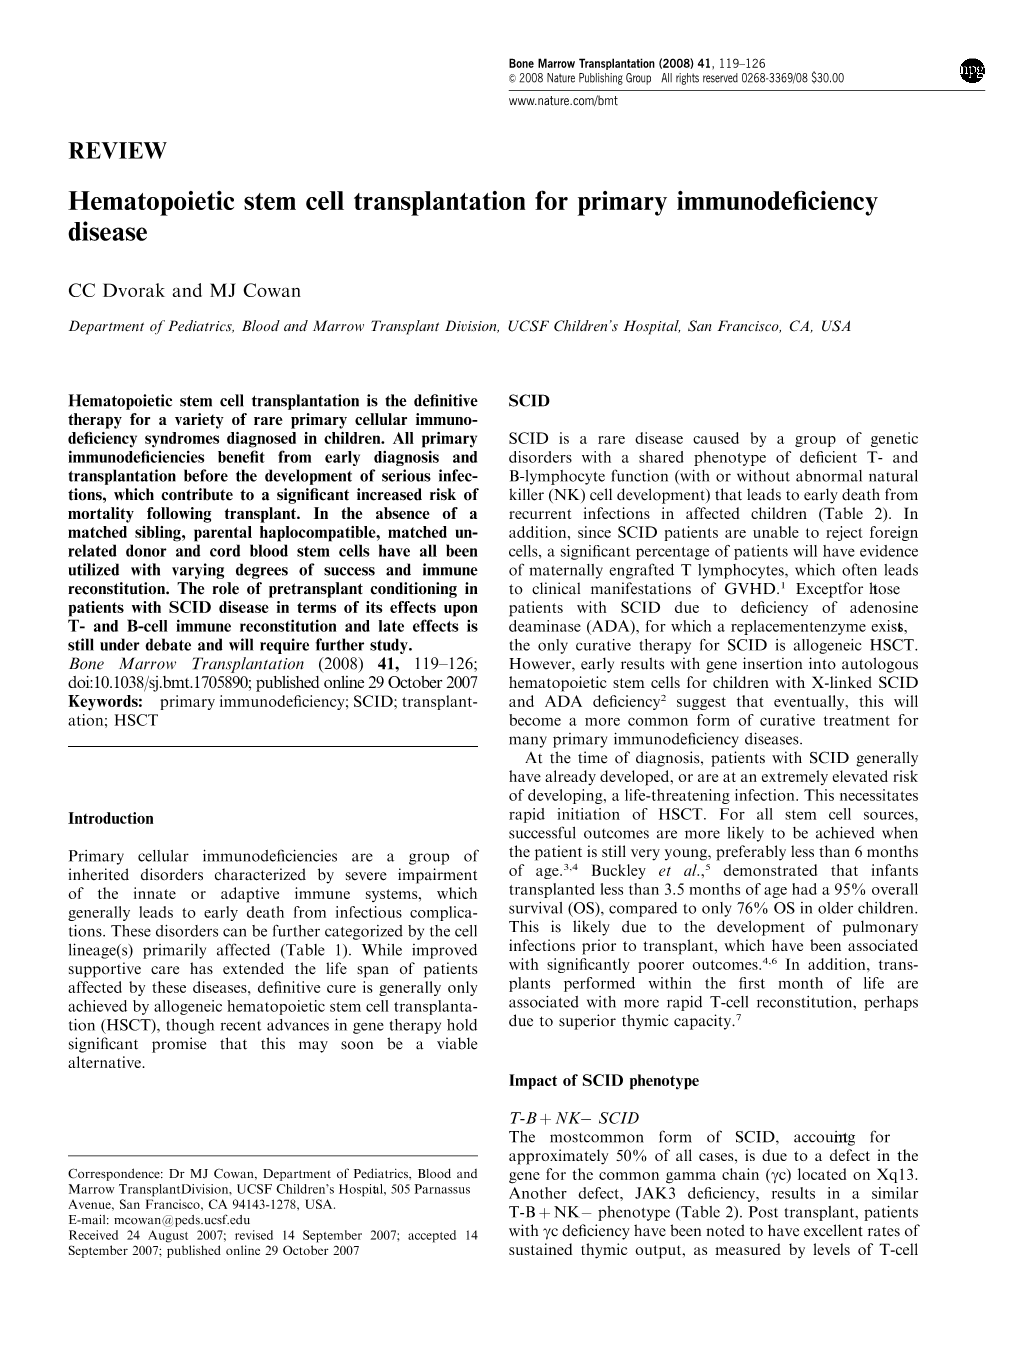 Hematopoietic Stem Cell Transplantation for Primary Immunodeﬁciency Disease